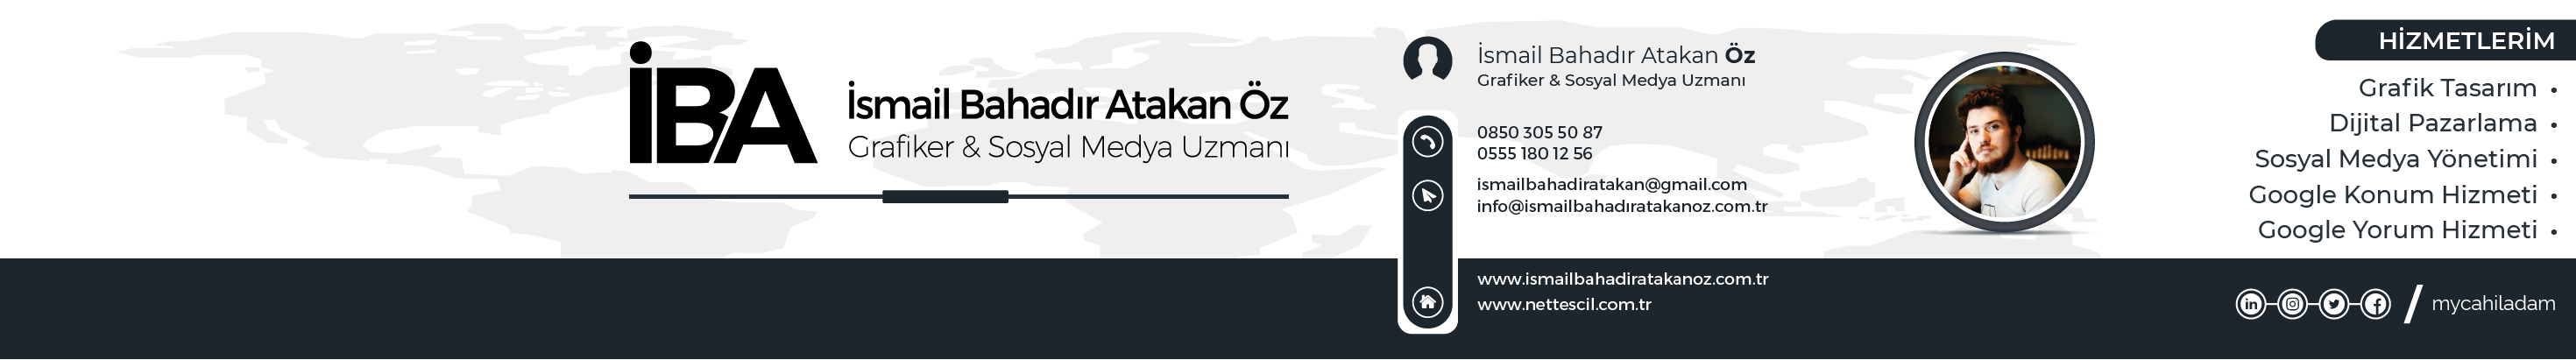 İsmail Bahadır Atakan Öz's profile banner